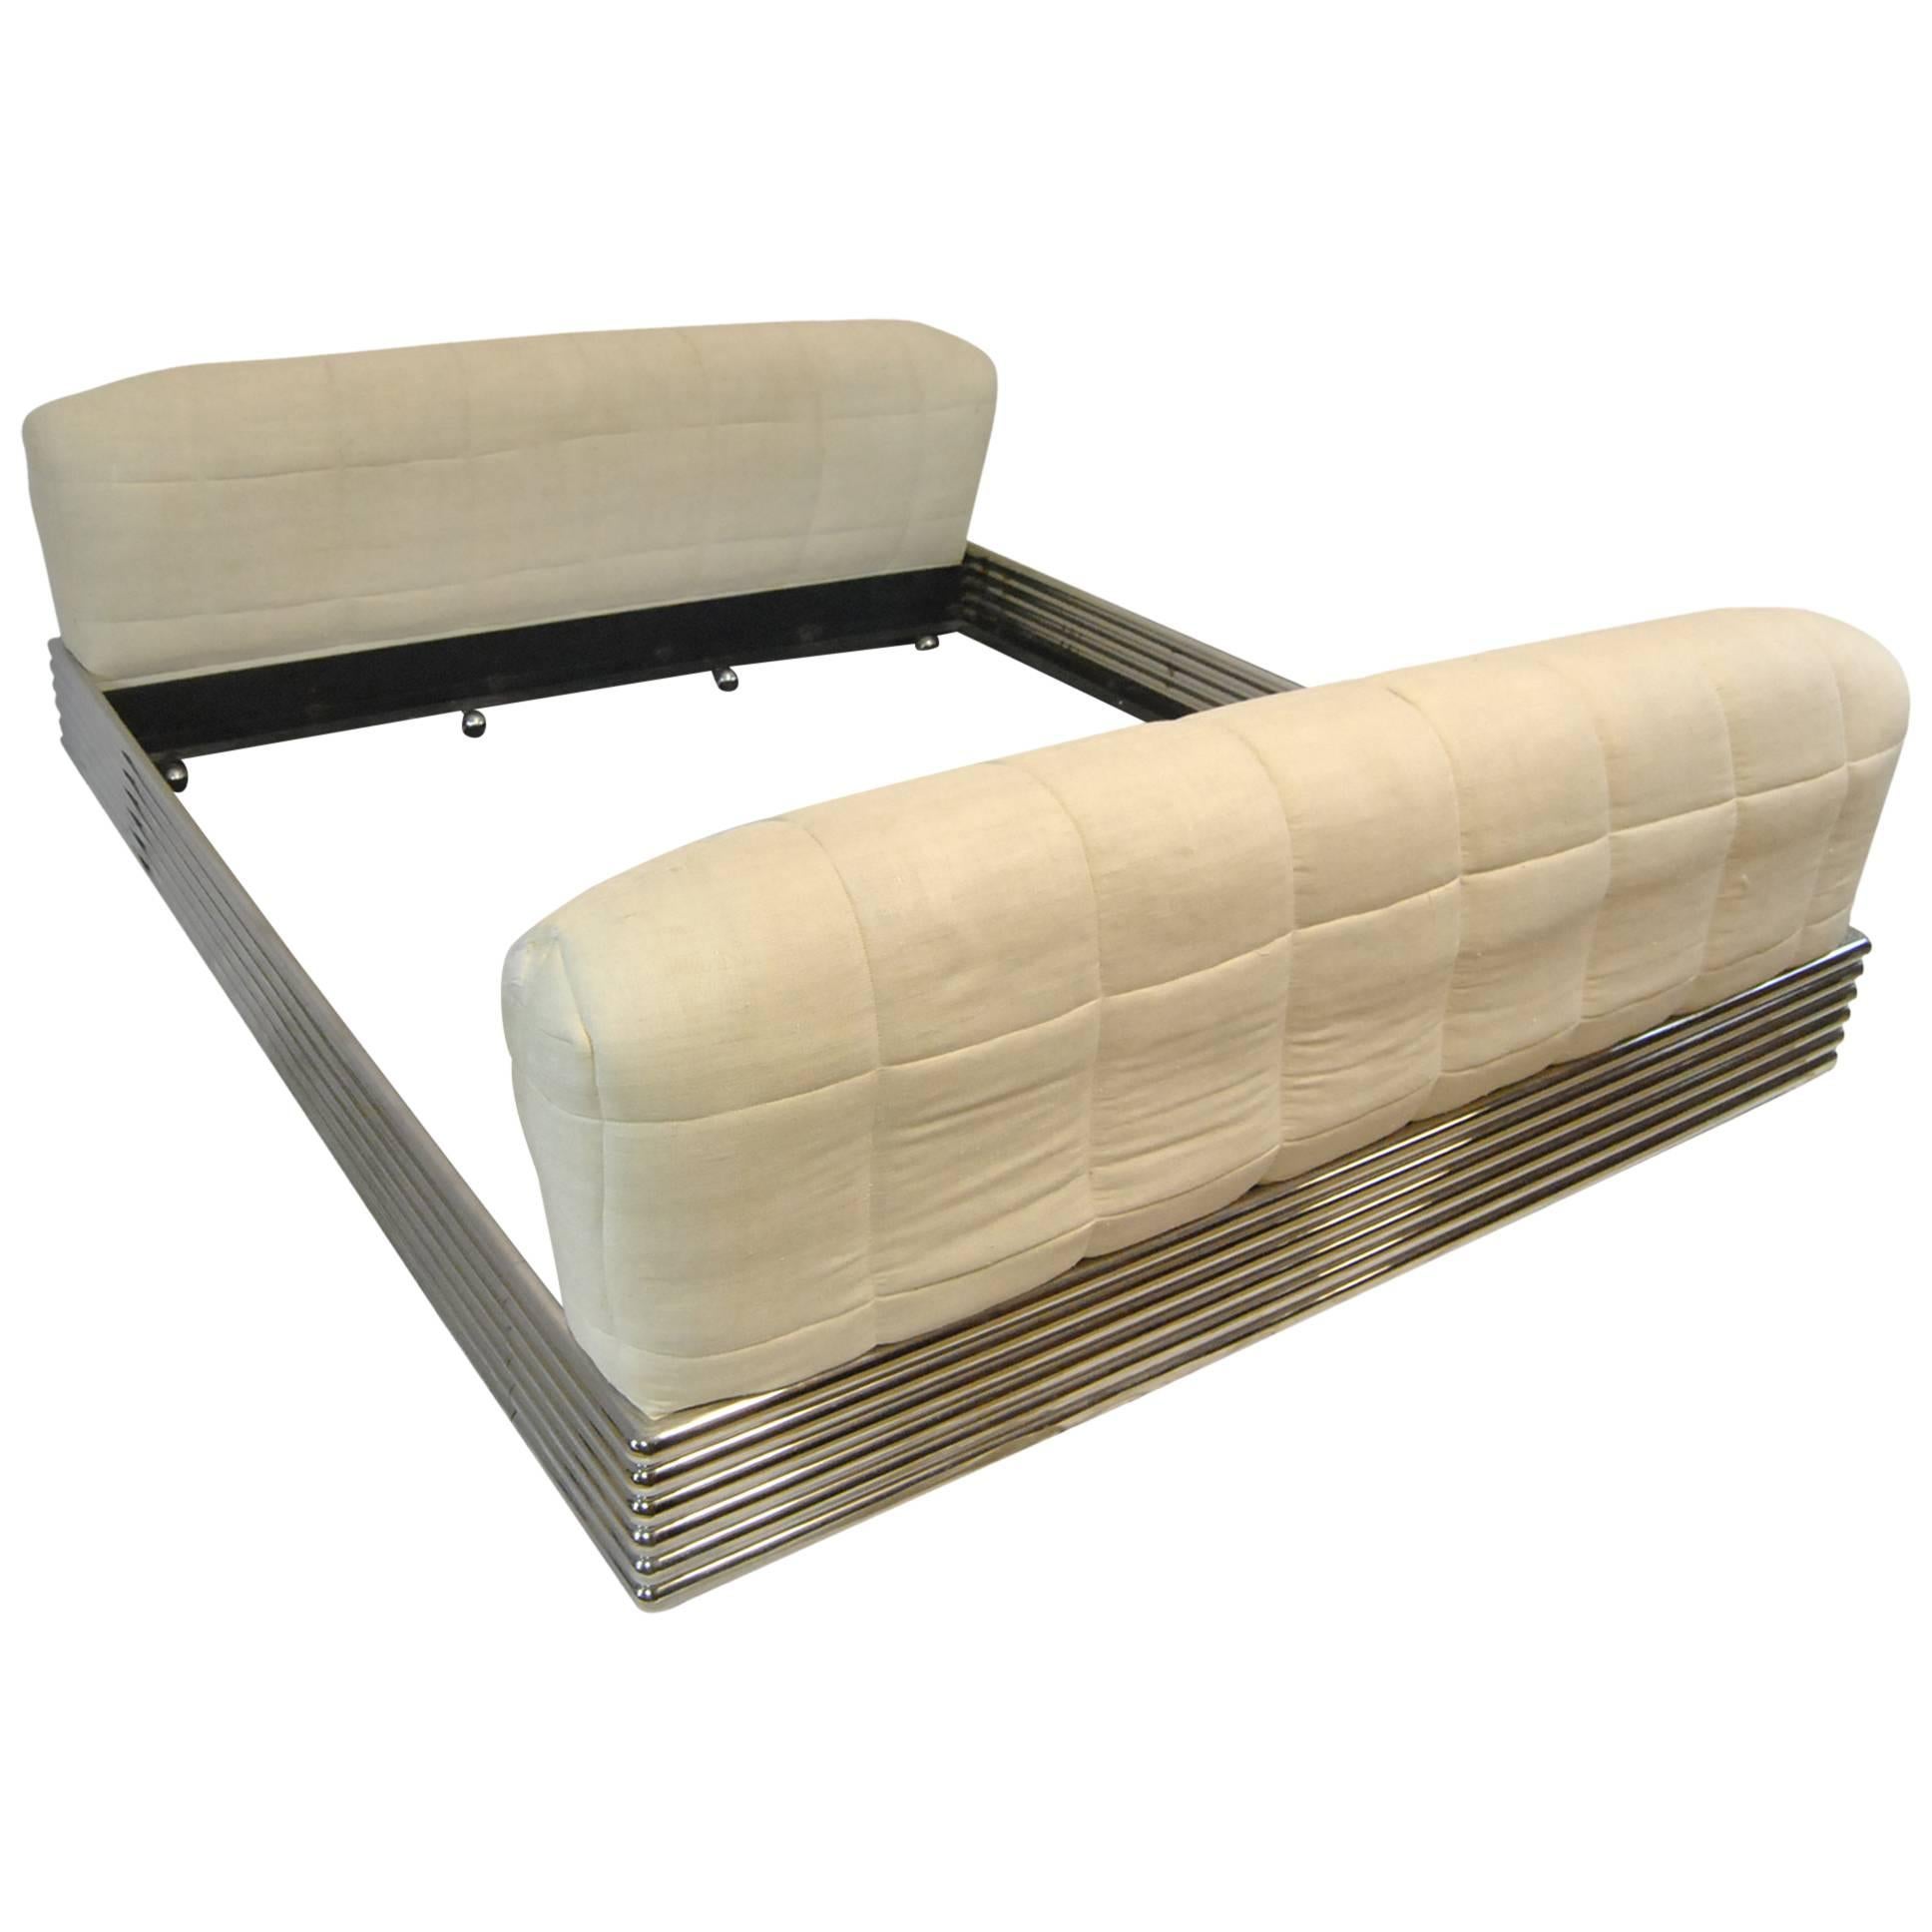 King-Size Radiator Bed Designed by Stanley Jay Friedman for Brueton